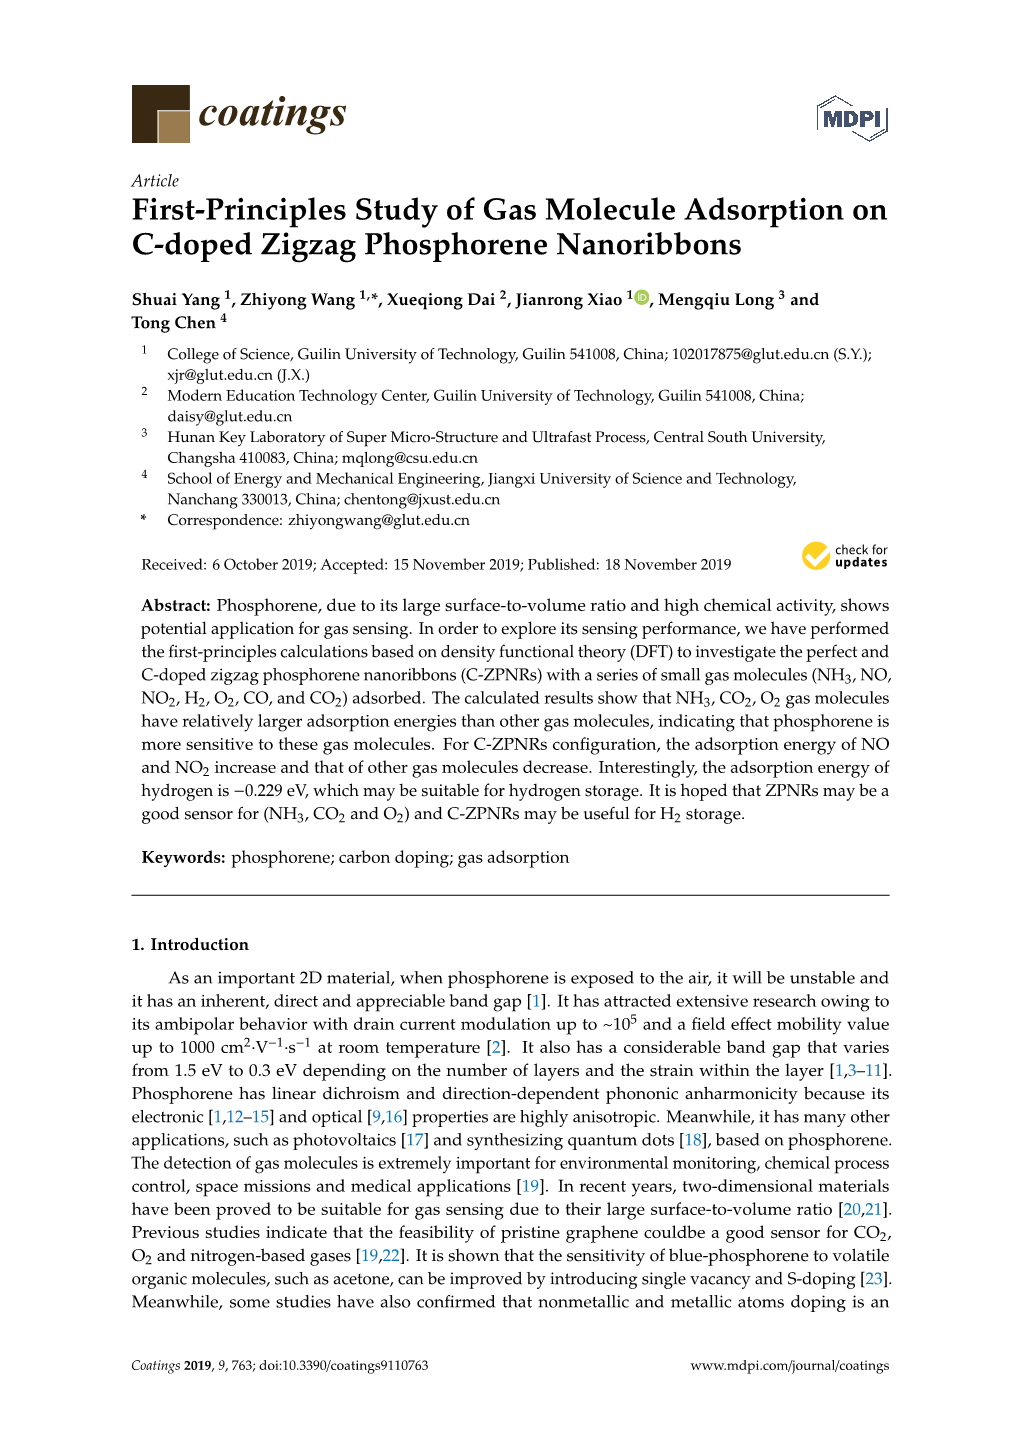 First-Principles Study of Gas Molecule Adsorption on C-Doped Zigzag Phosphorene Nanoribbons